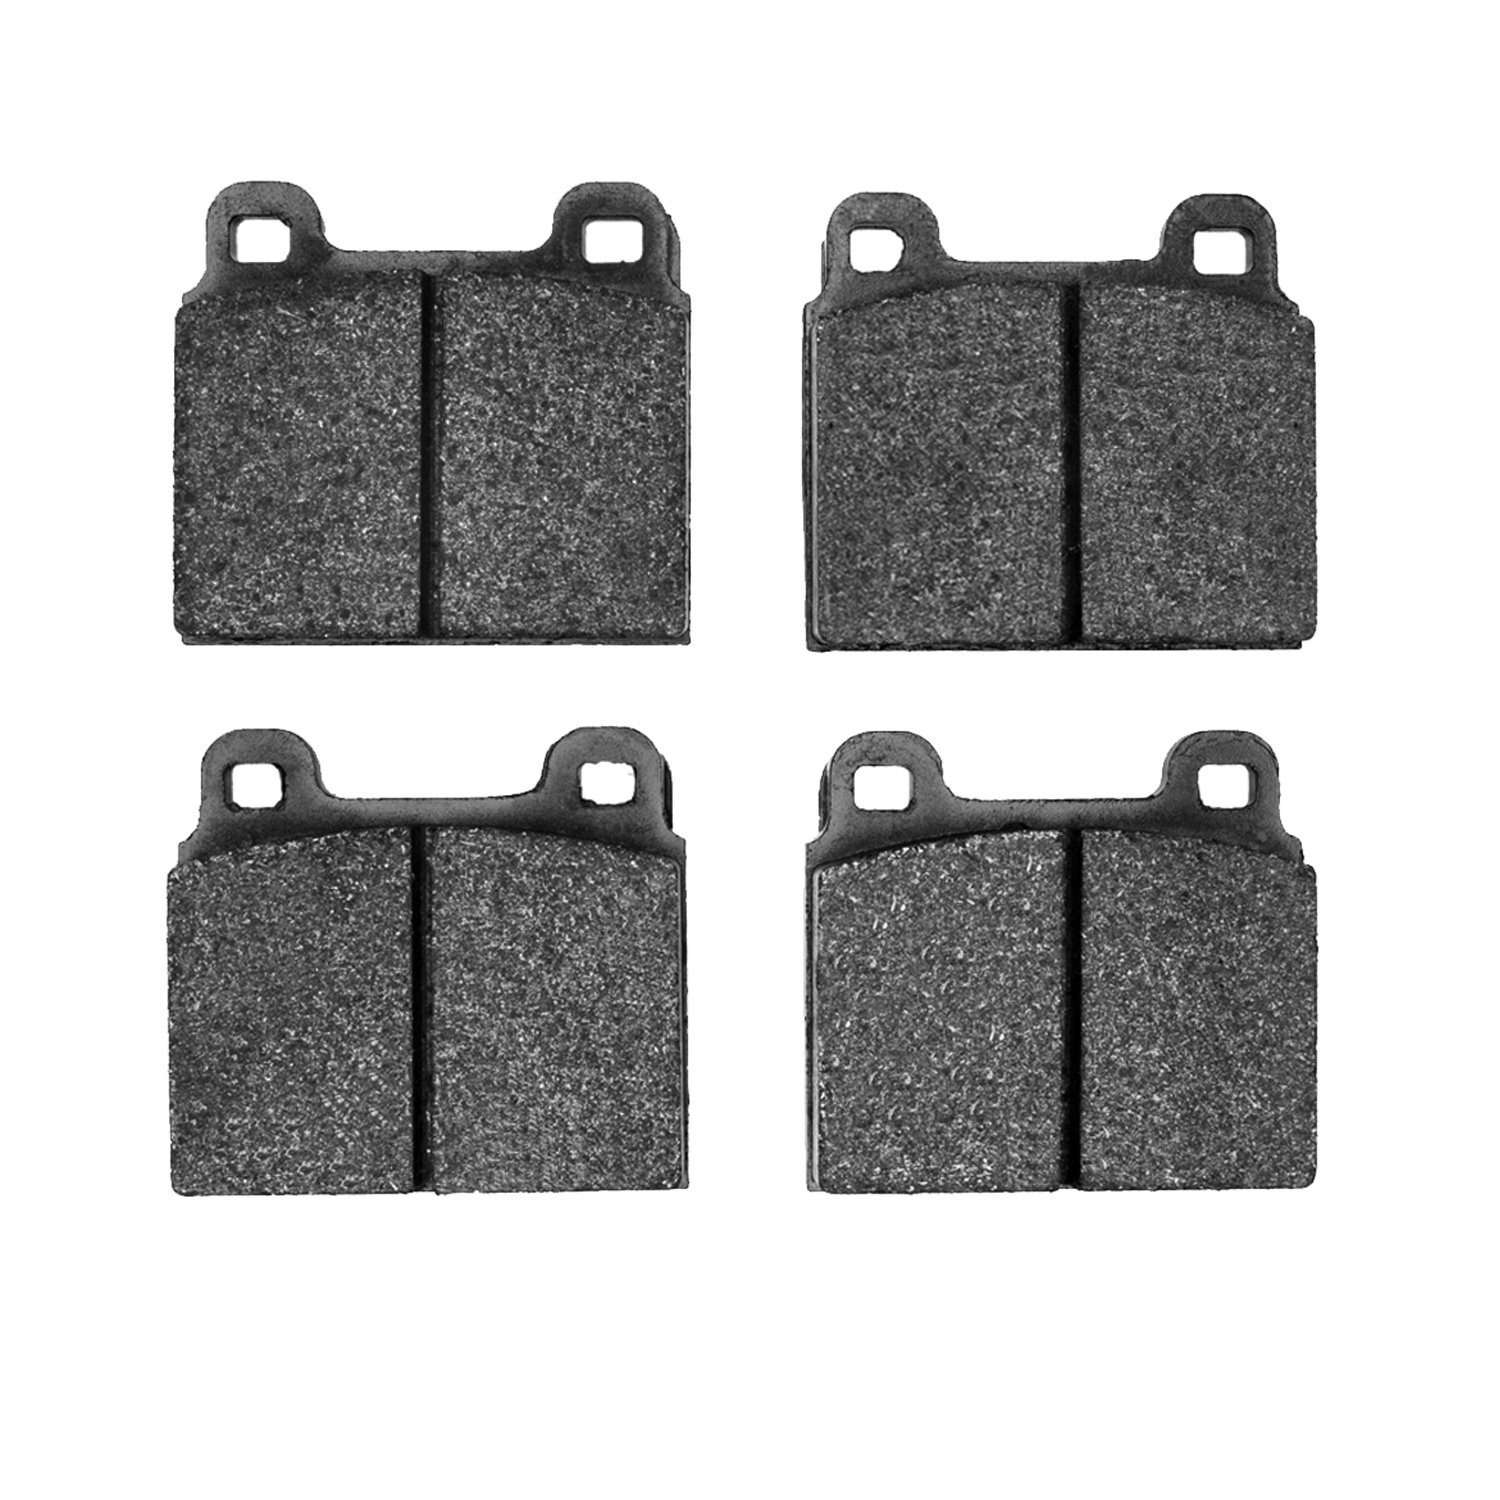 1310-0045-00 3000-Series Ceramic Brake Pads, 1963-1994 Multiple Makes/Models, Position: Front